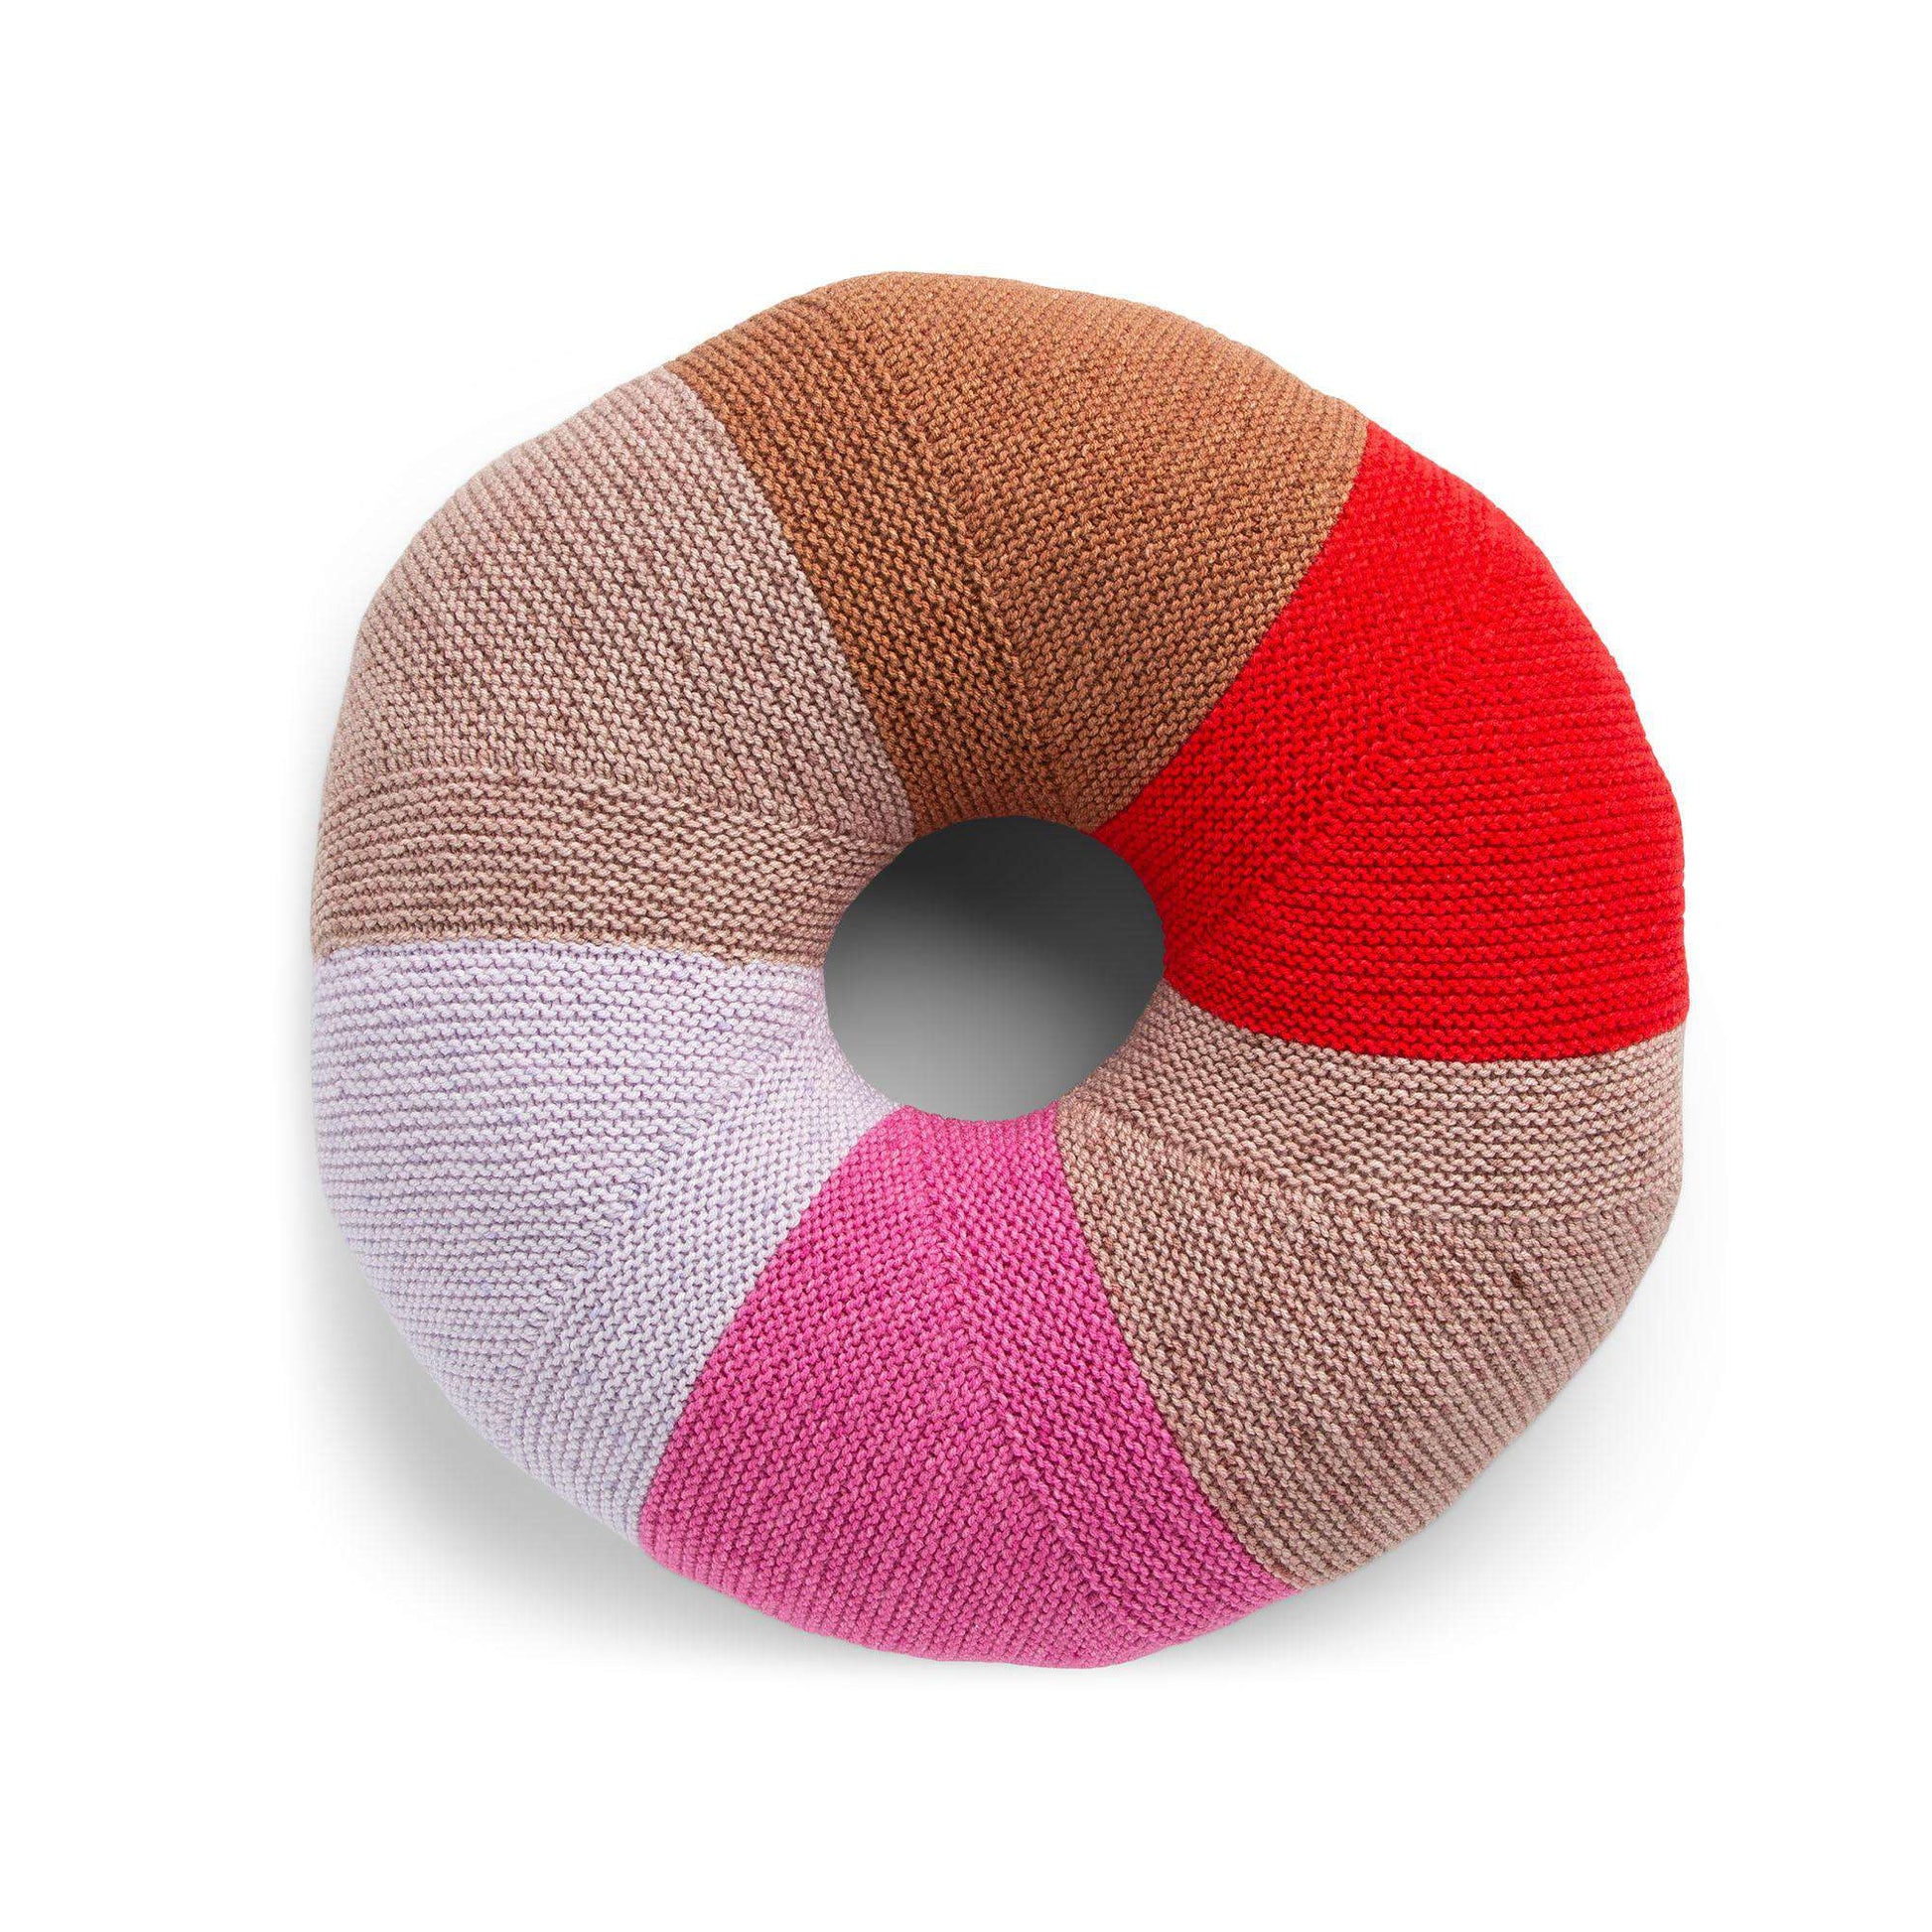 Caron Big Donut Knit Pillow Pattern